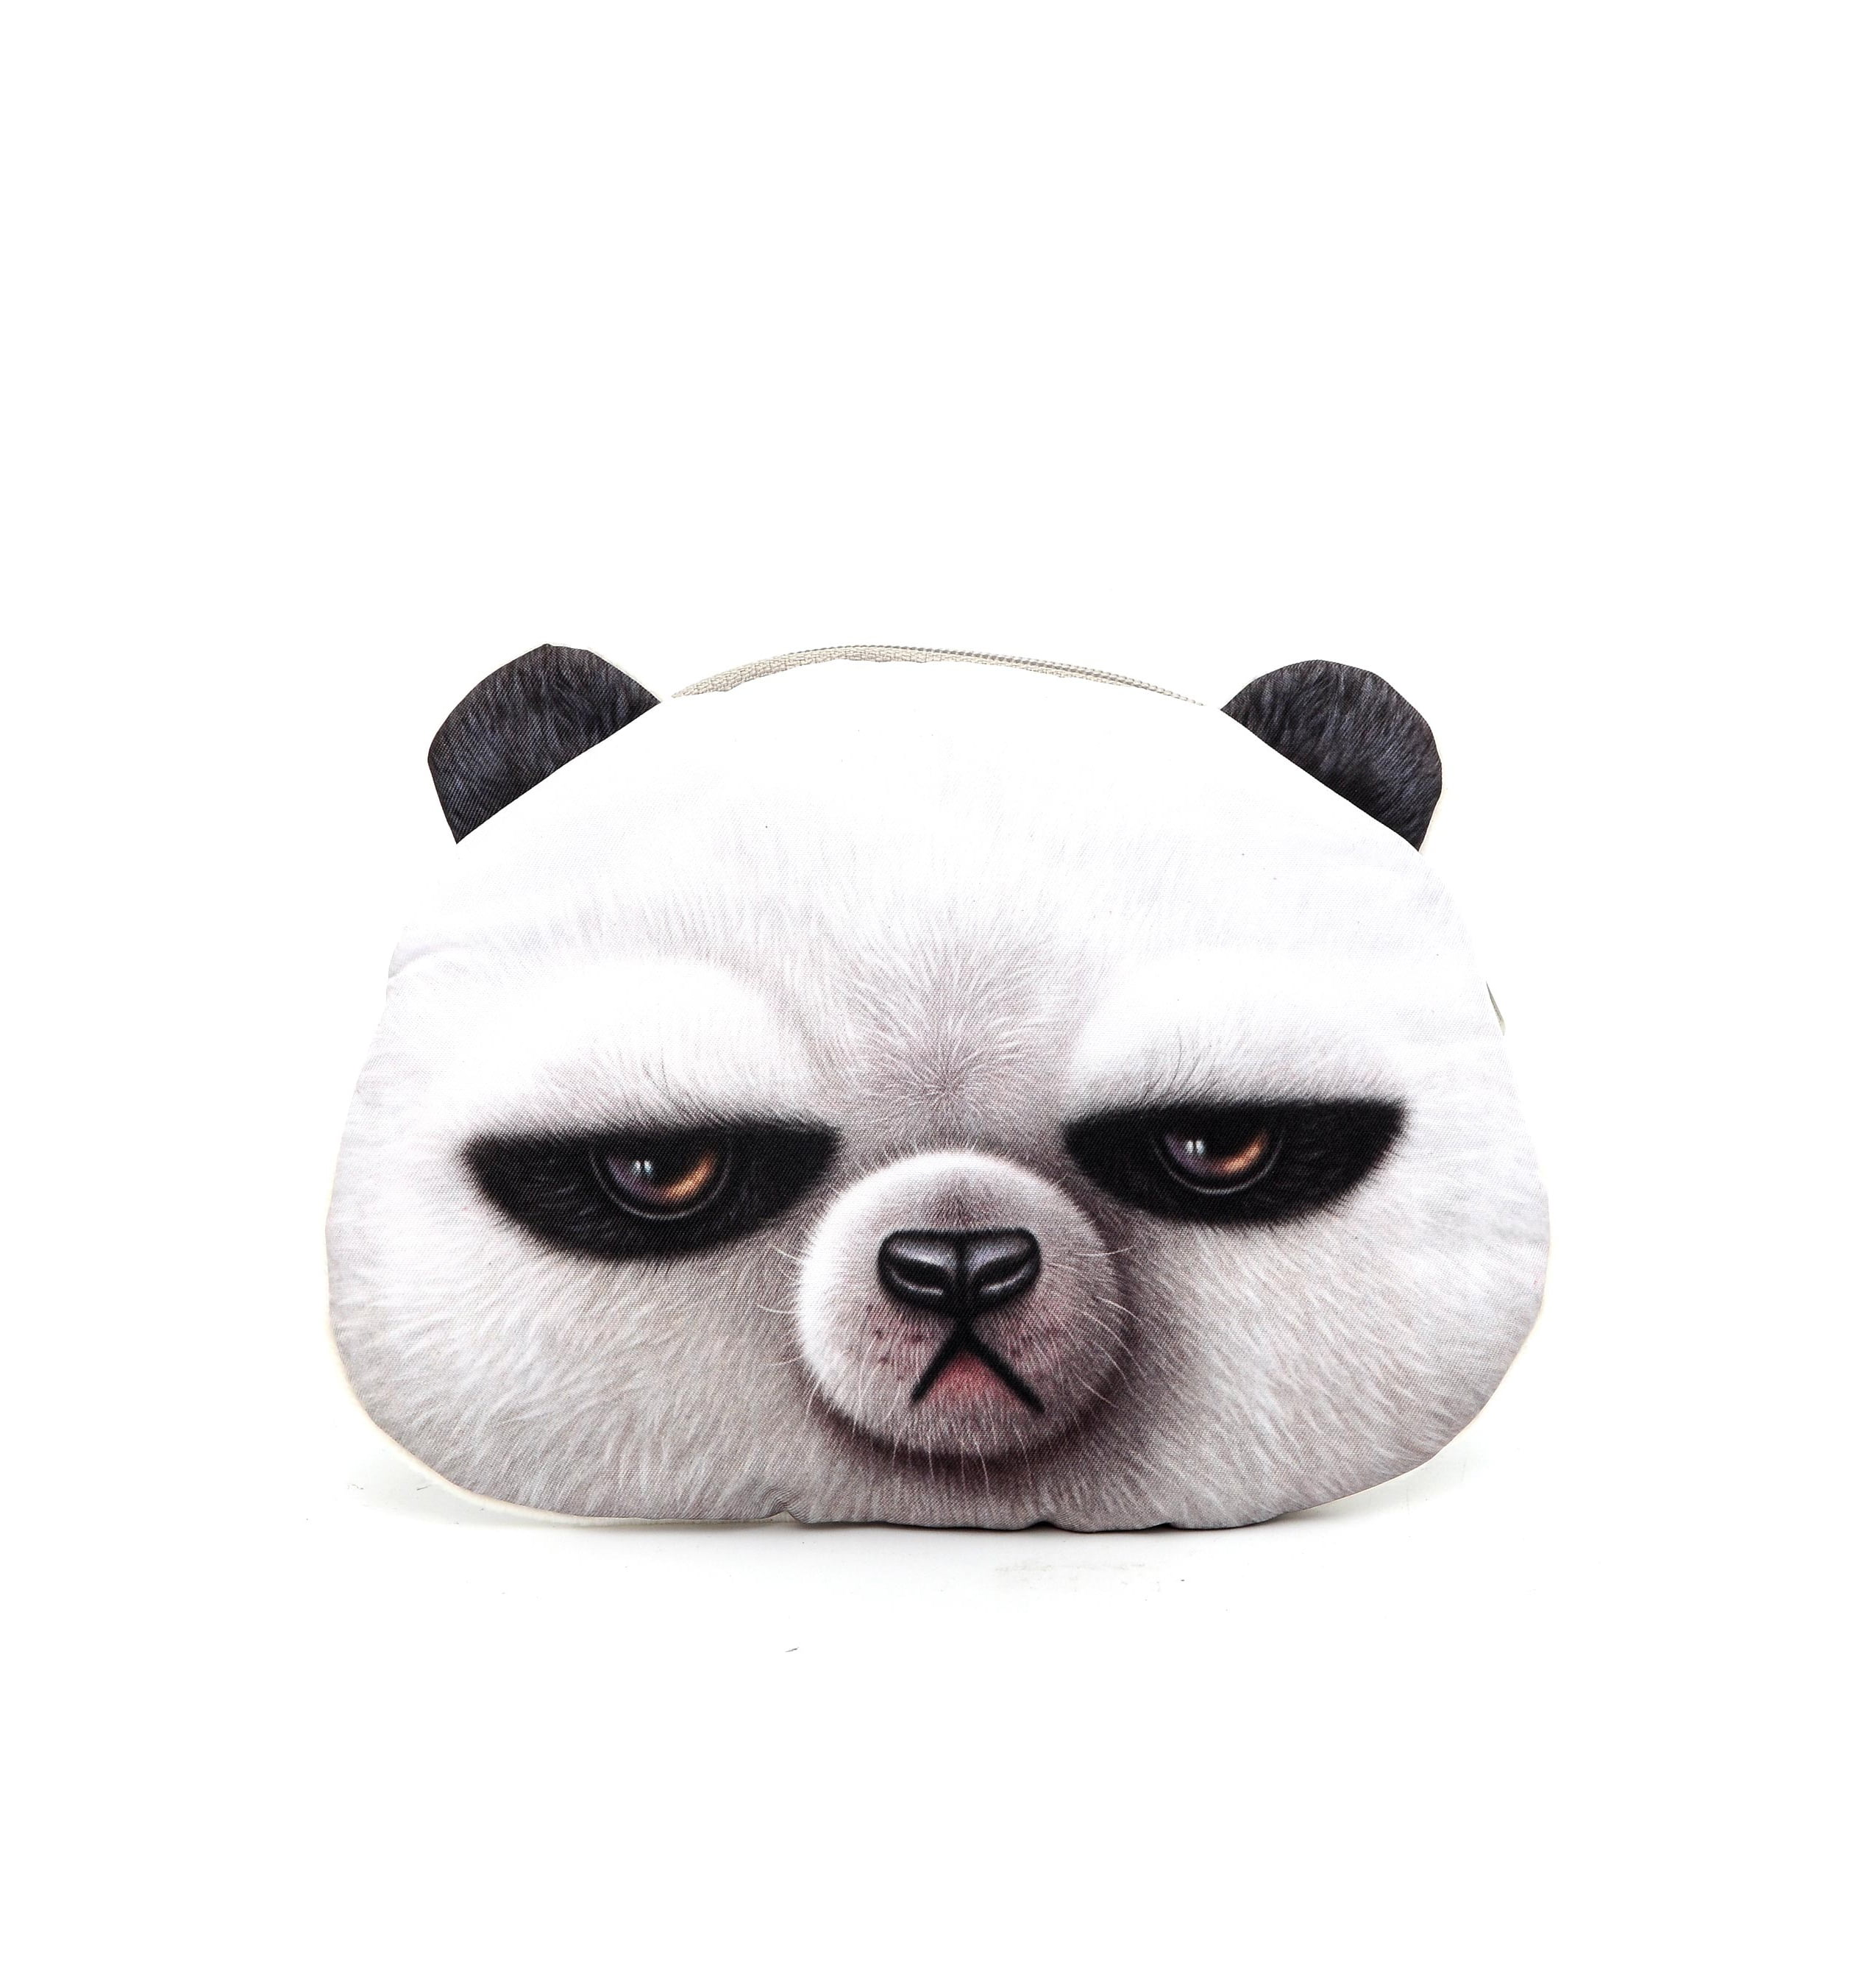 5" Plush Panda Animal 3D Zippered Coin Pouch Bag Key Chain Black White NEW